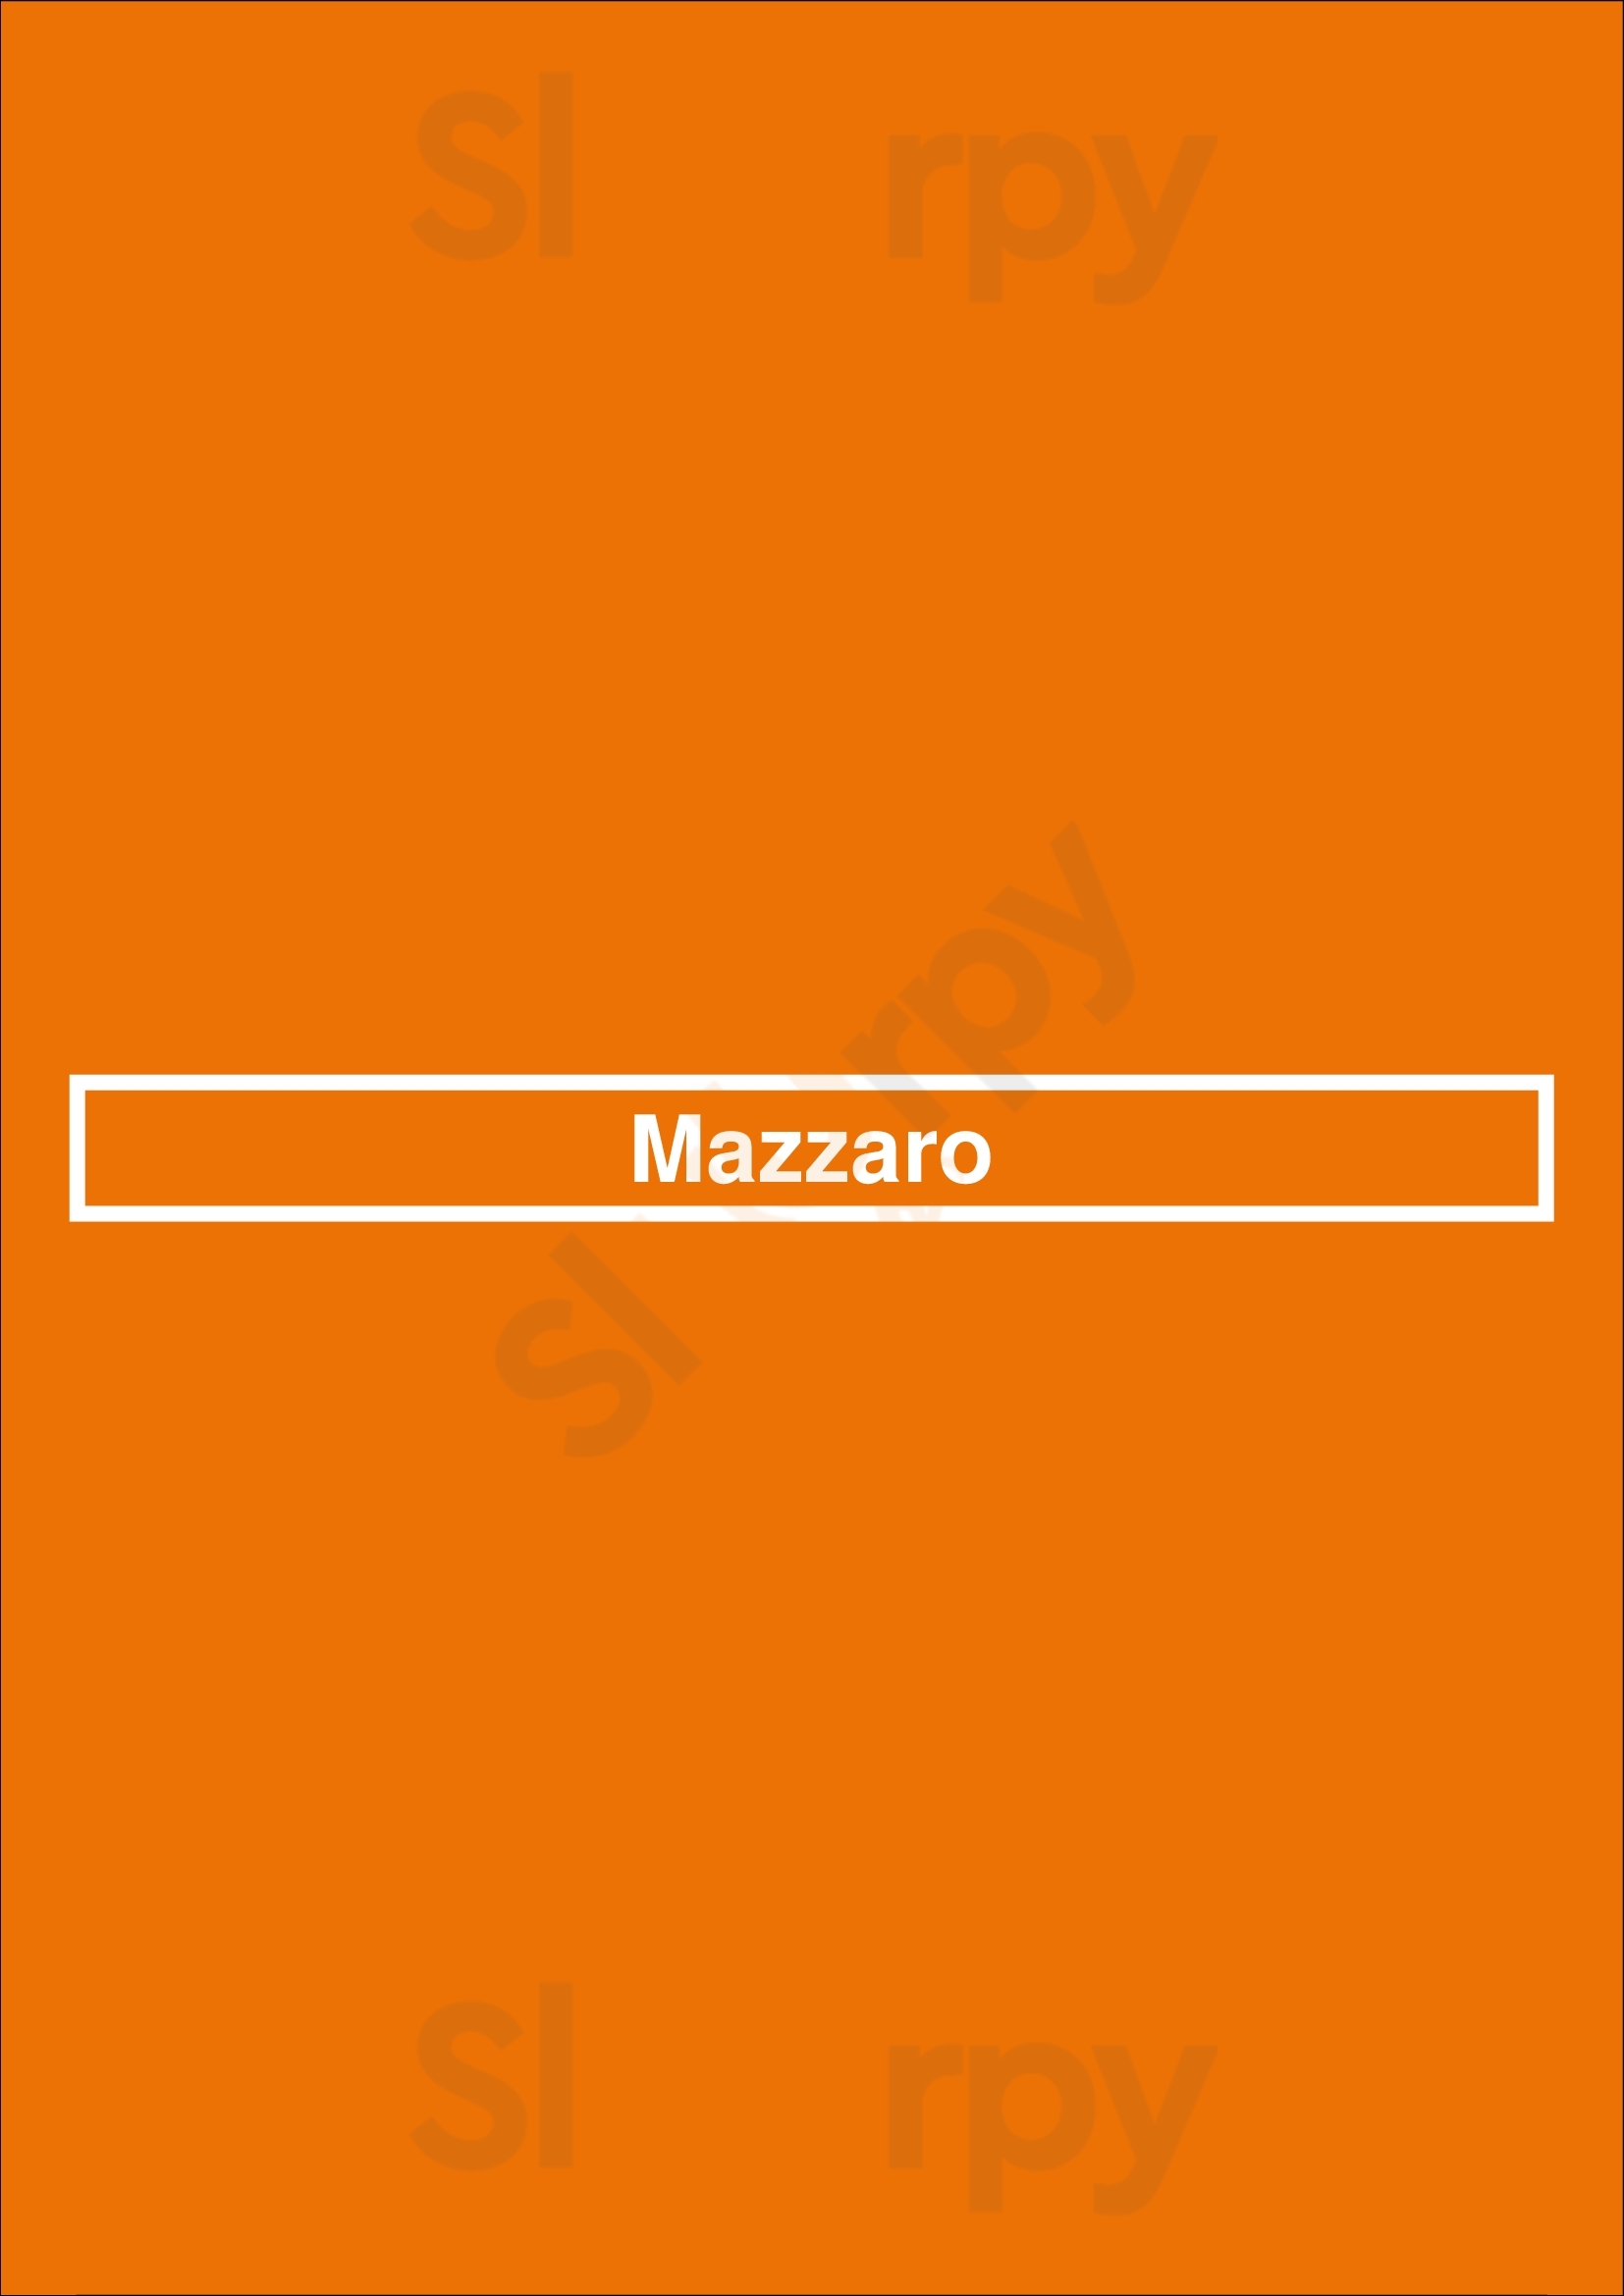 Mazzaro Sydney Menu - 1